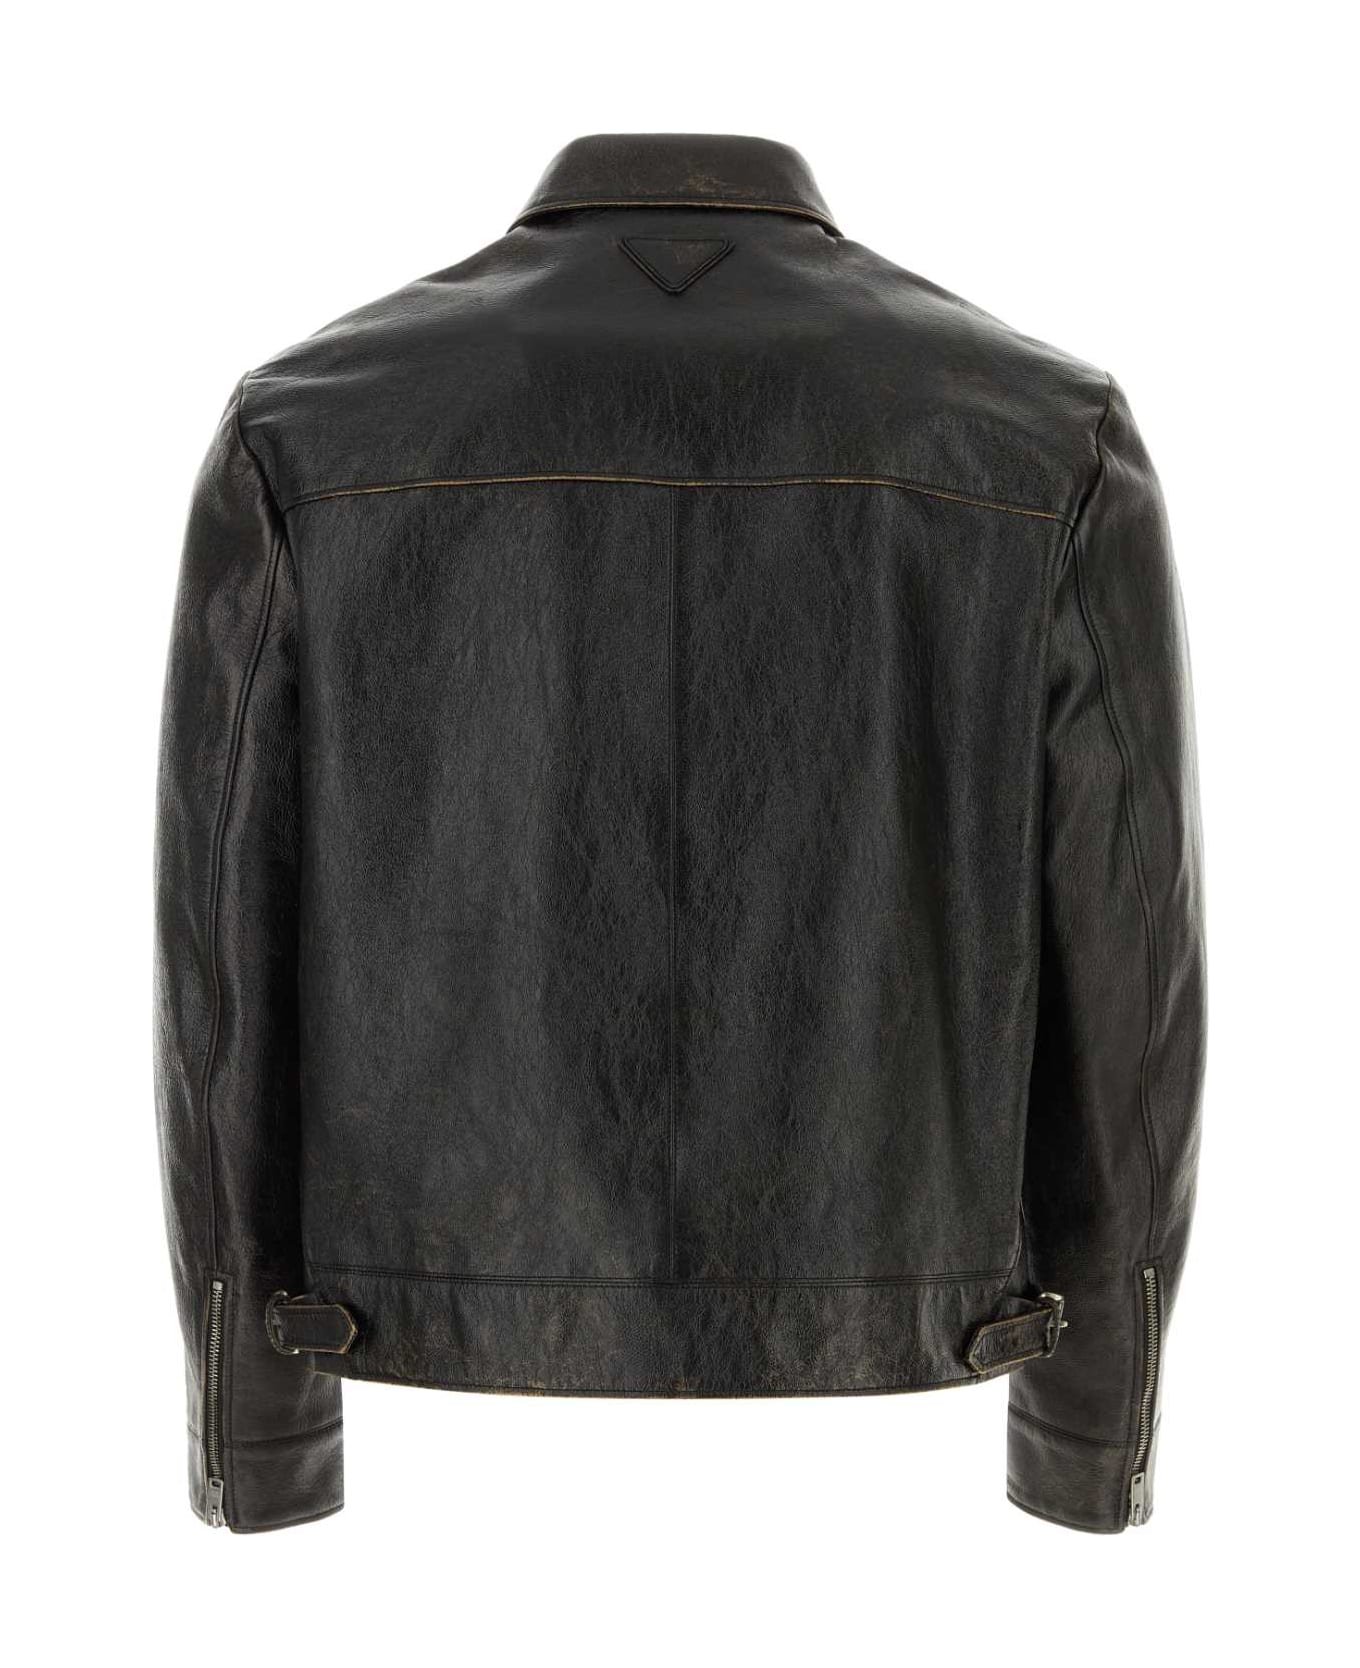 Prada zip-up Black Leather Jacket - NERO